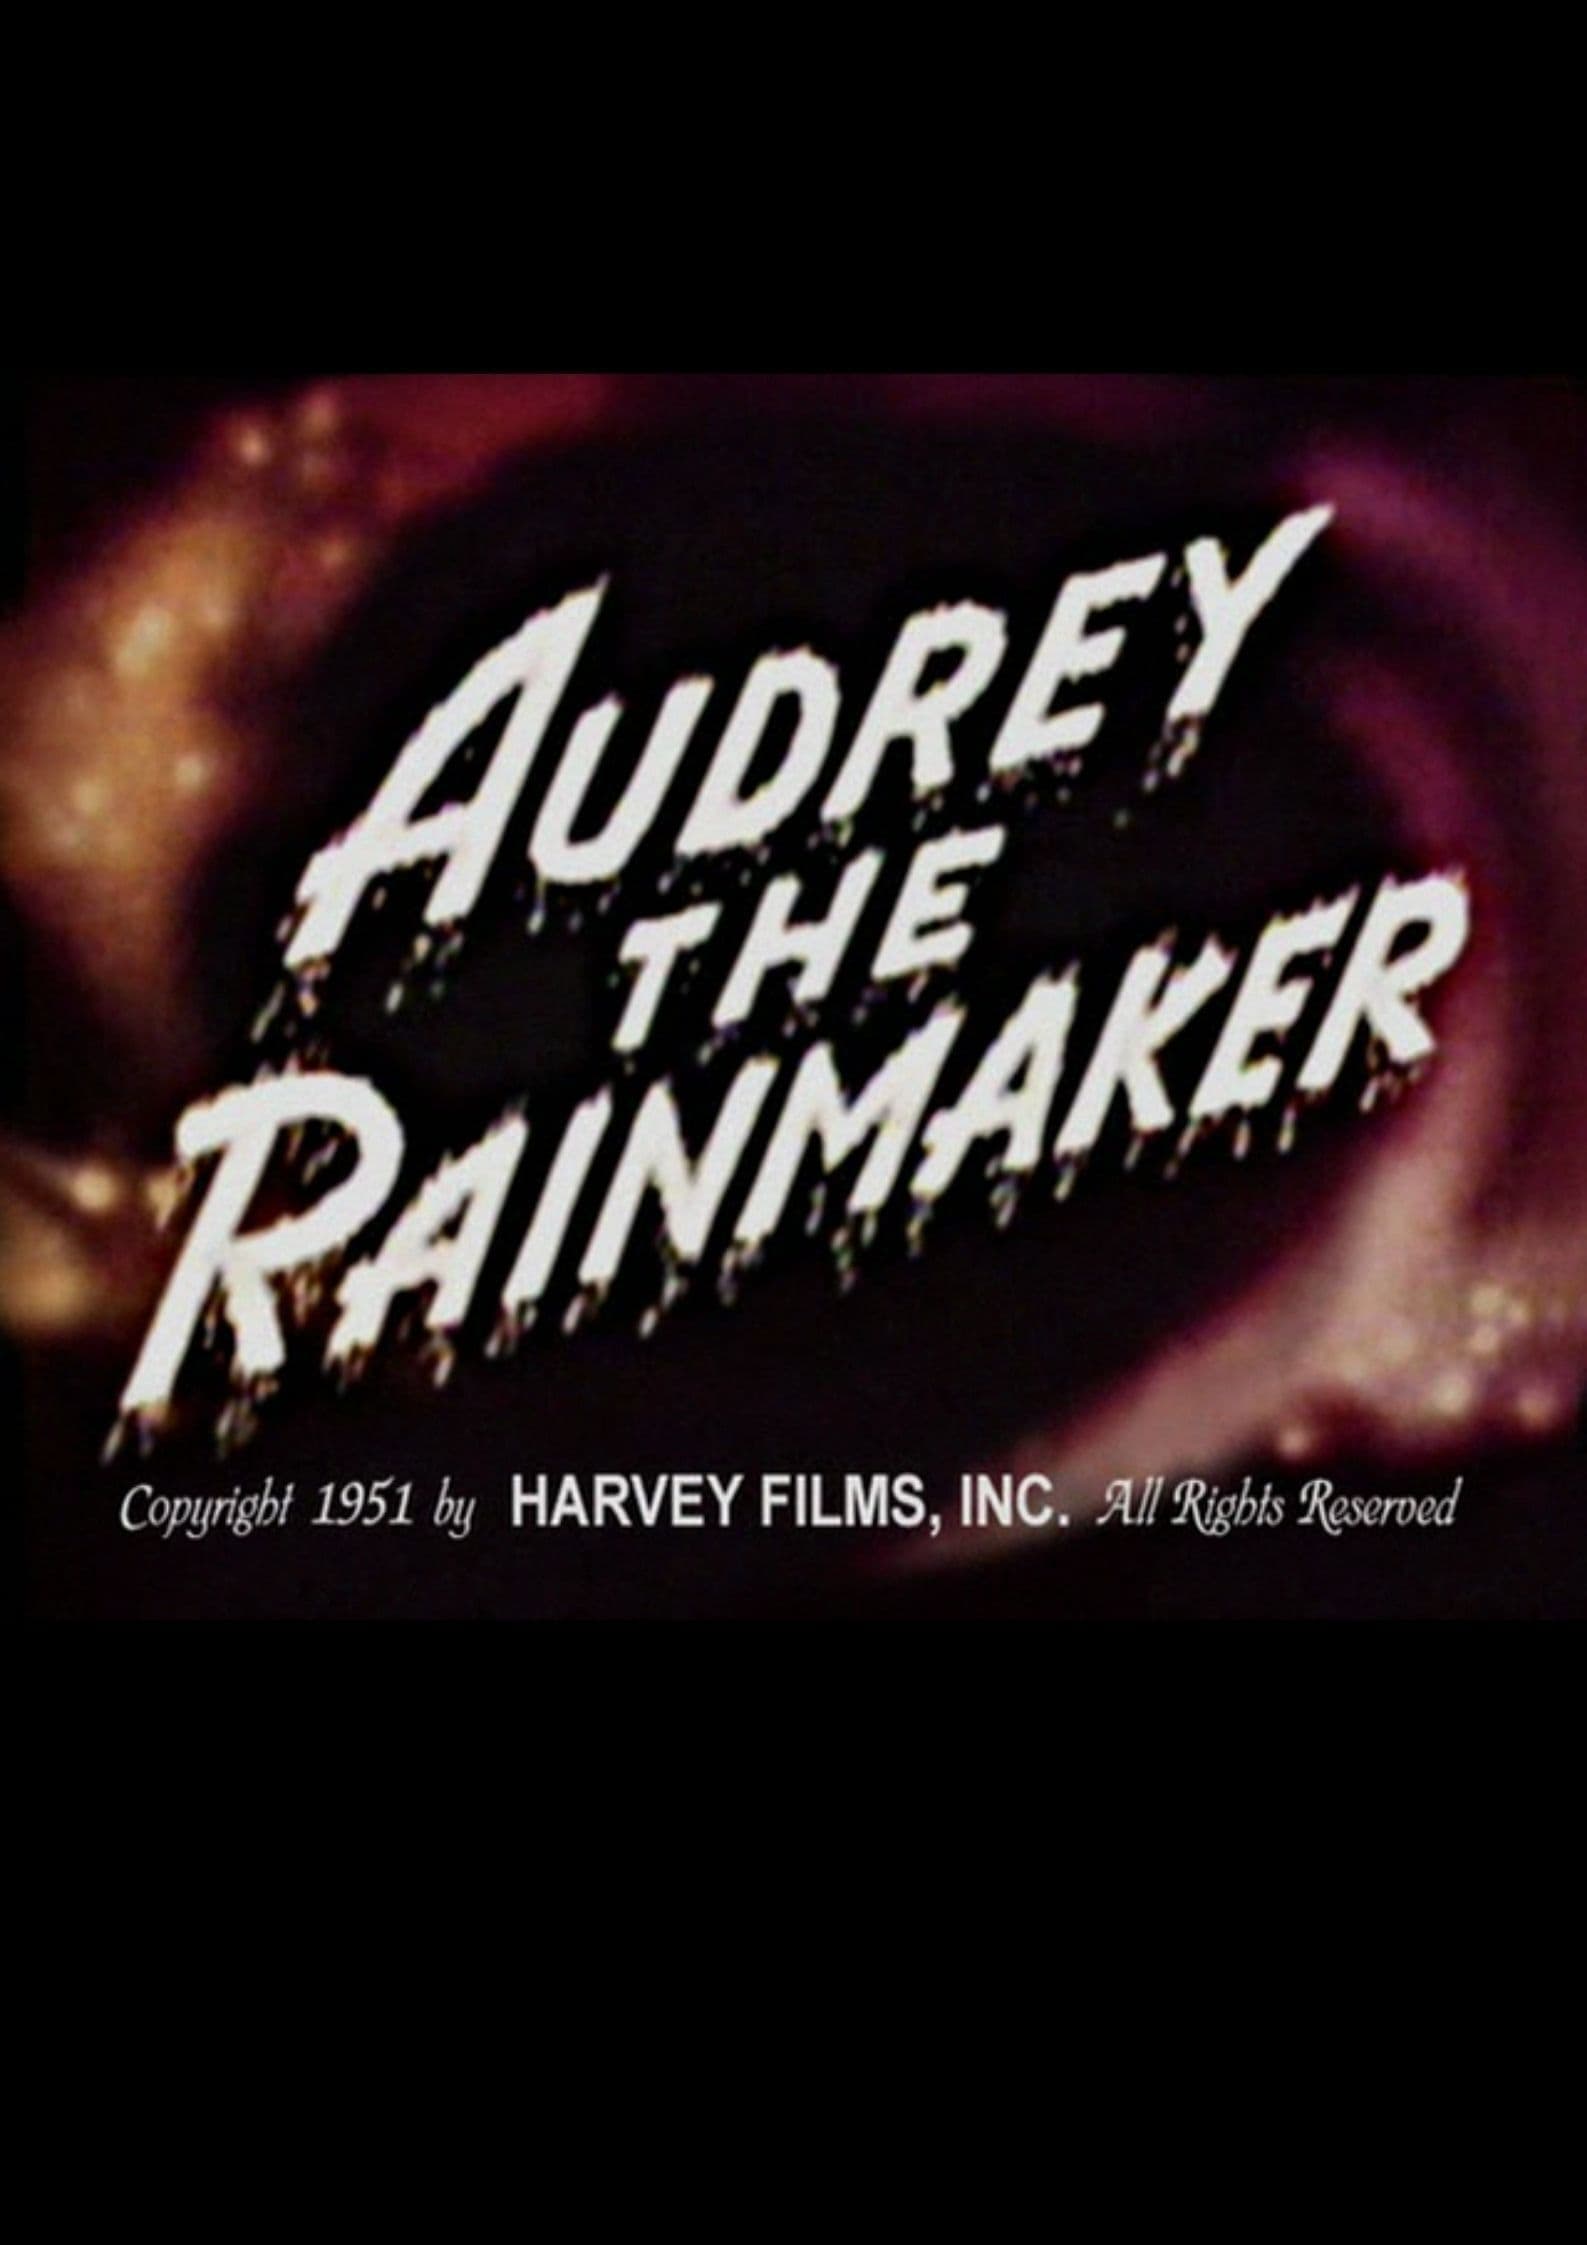 Audrey the Rainmaker